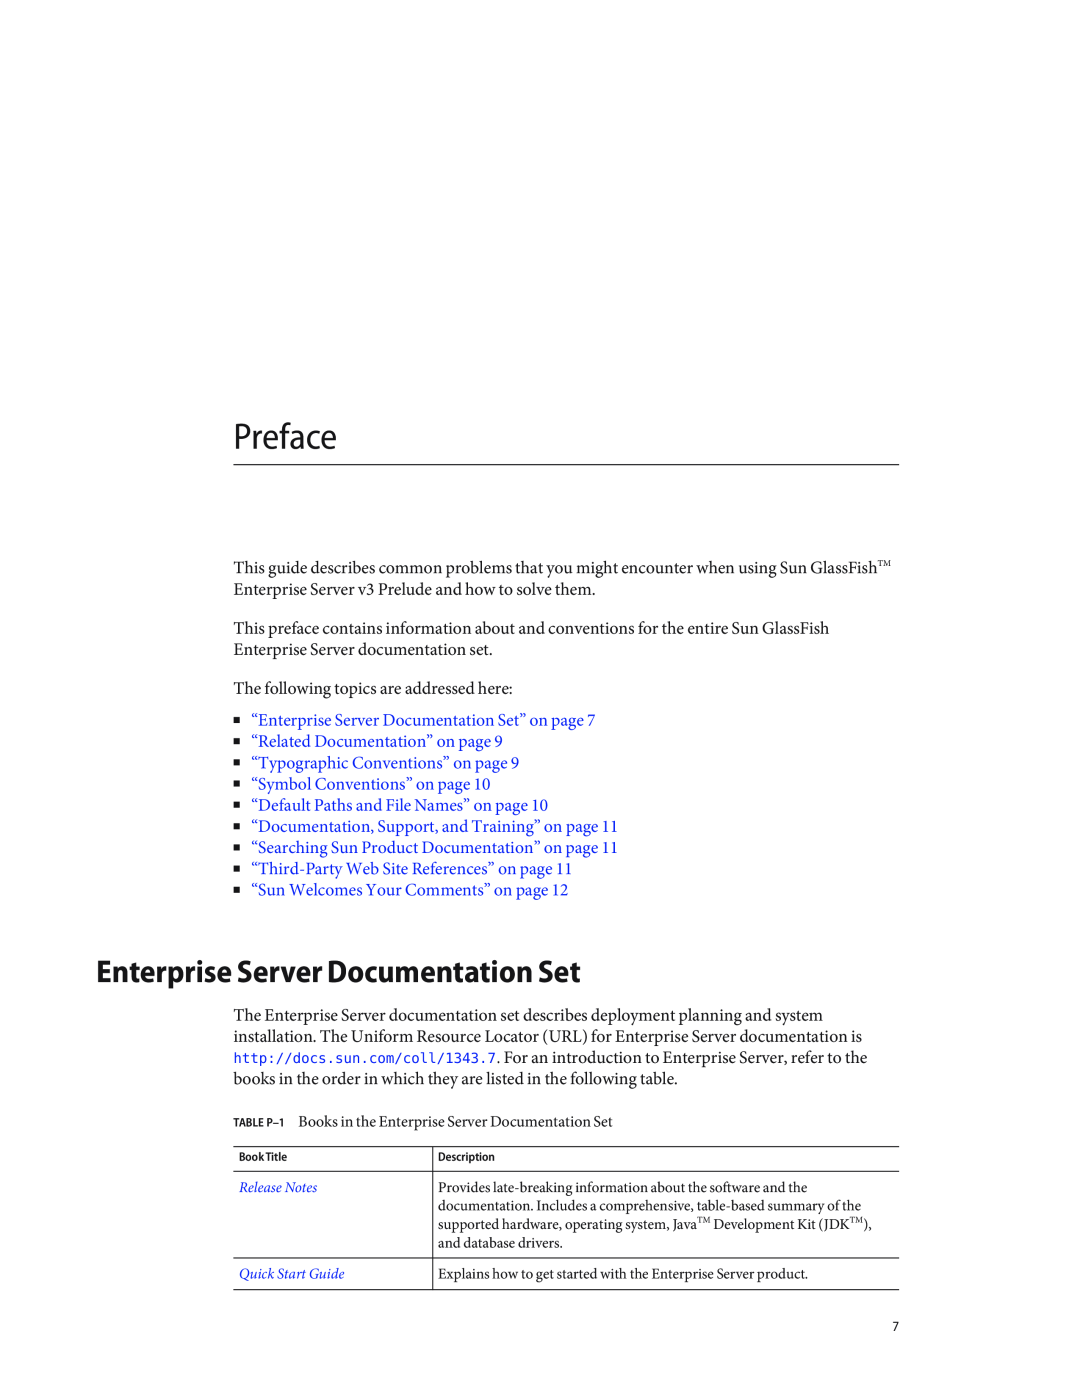 Sun Microsystems 820682310 manual Preface, “Enterprise Server Documentation Set” on page 